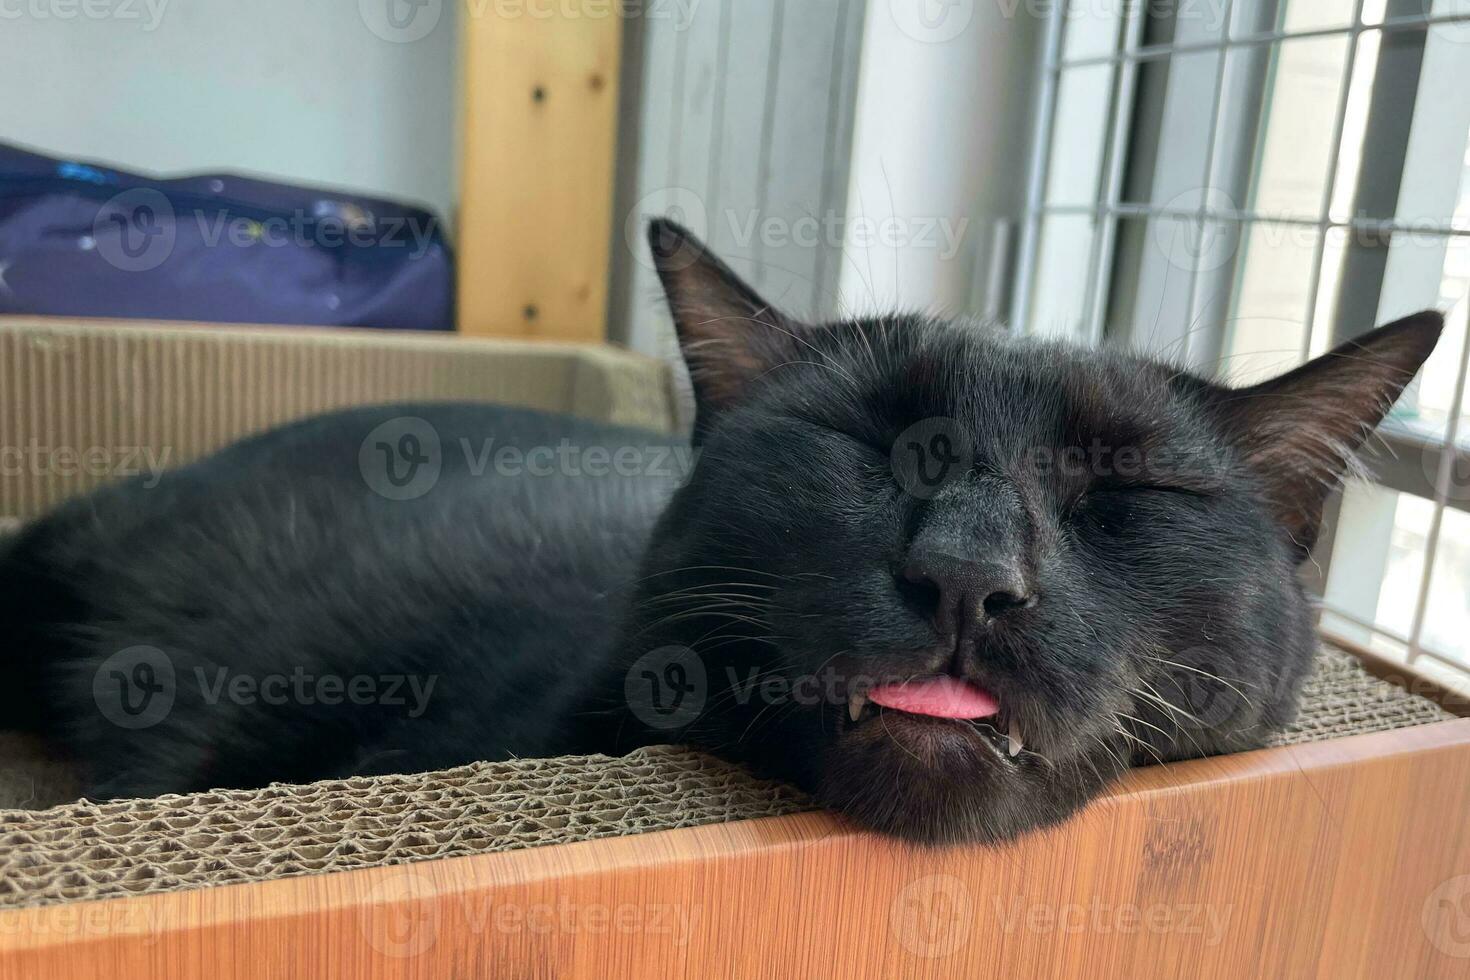 slapen zwart kat met tong uit. ontspannende met verbazingwekkend kat. foto